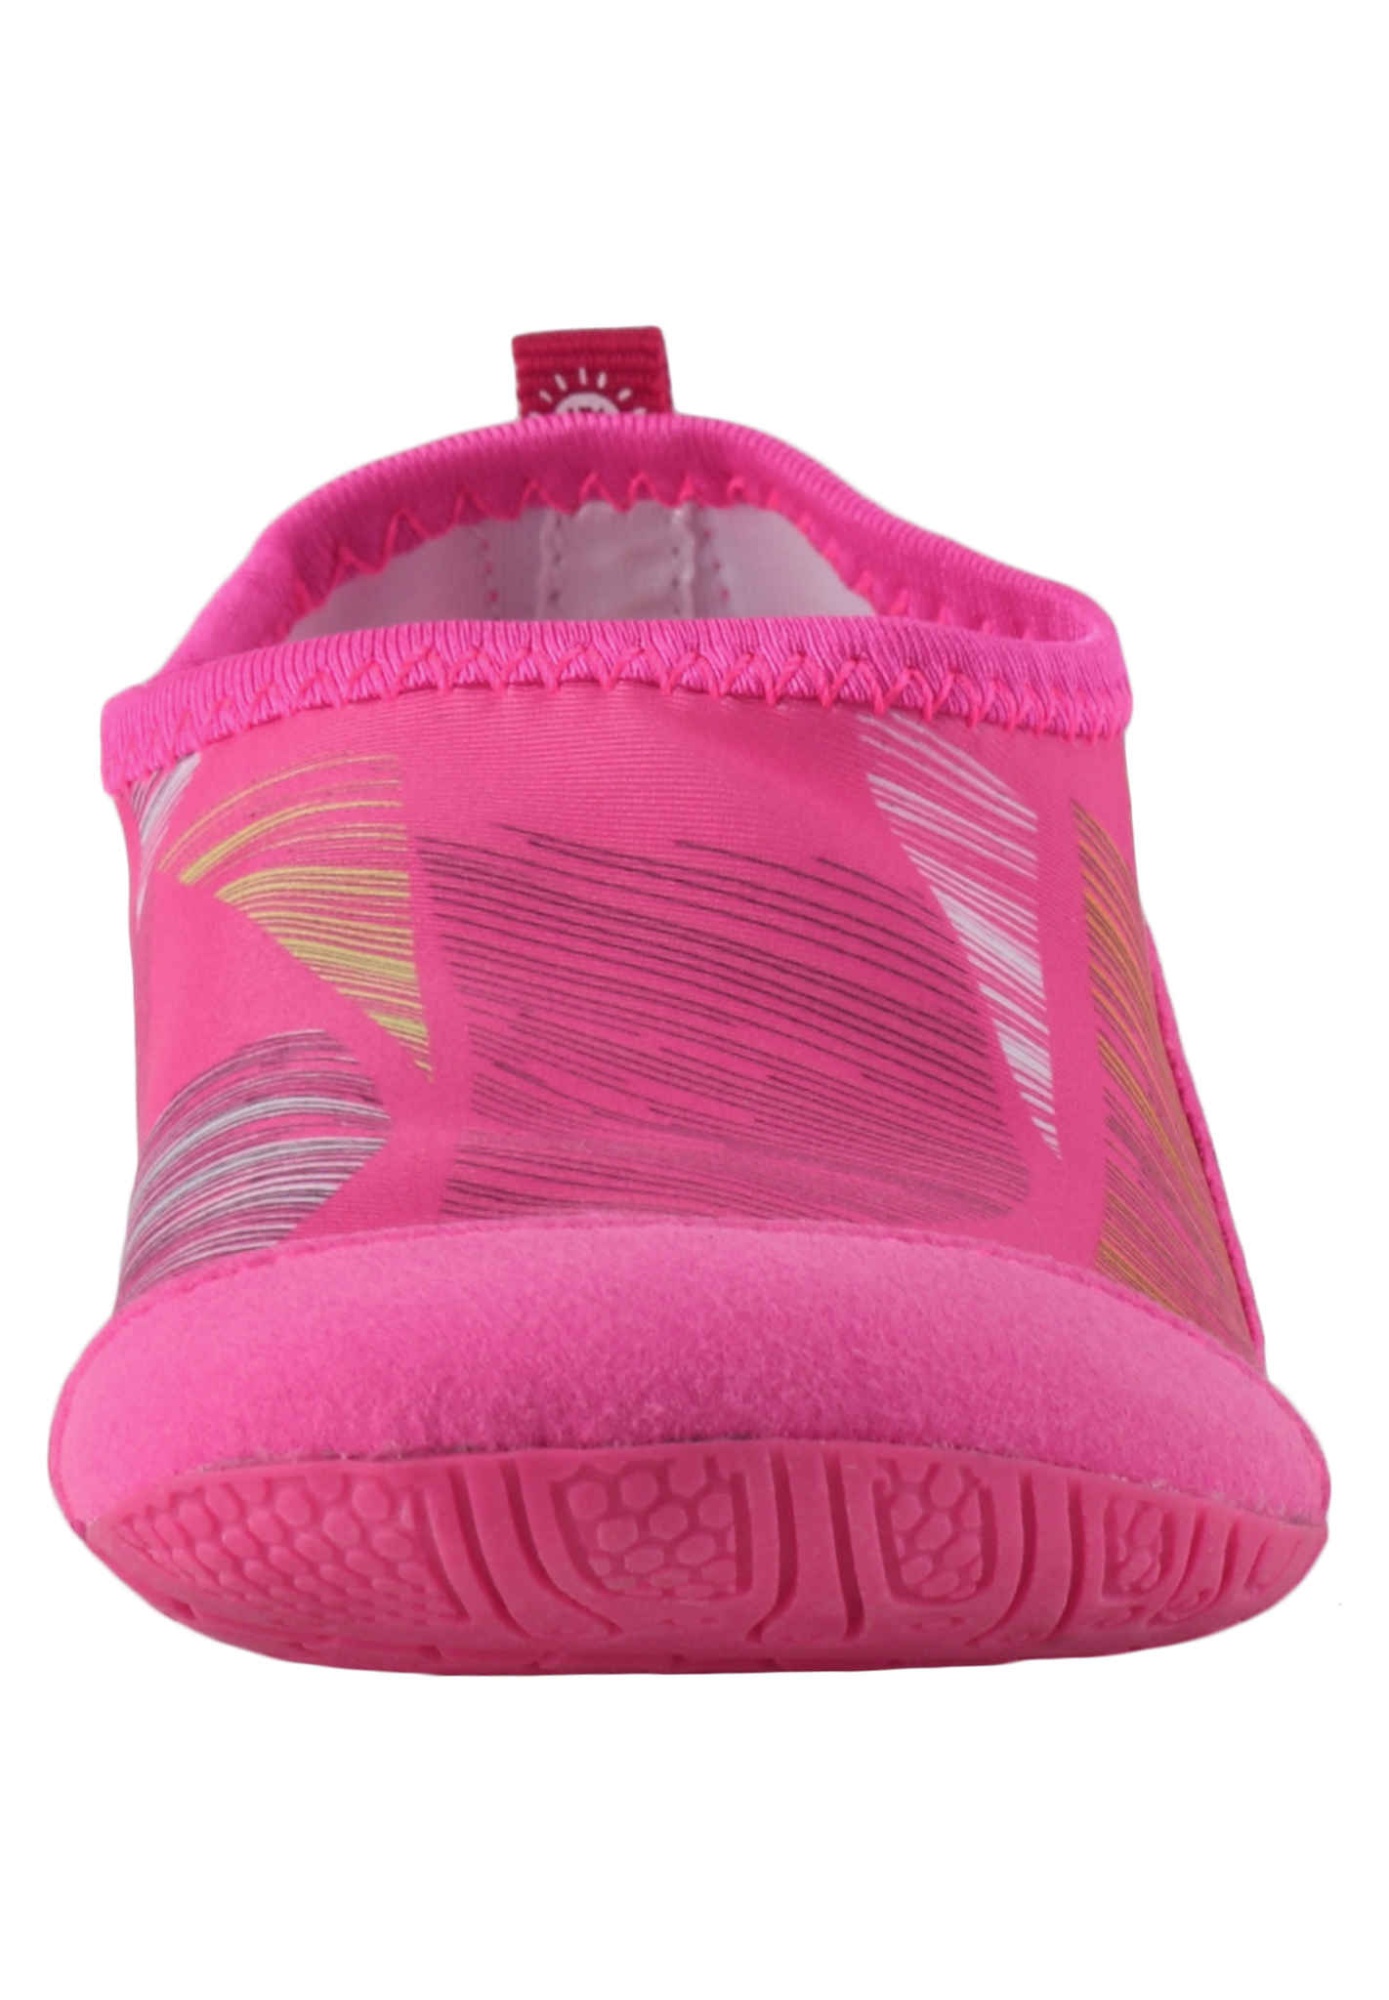 Тапки Reima Twister Розовые | фото